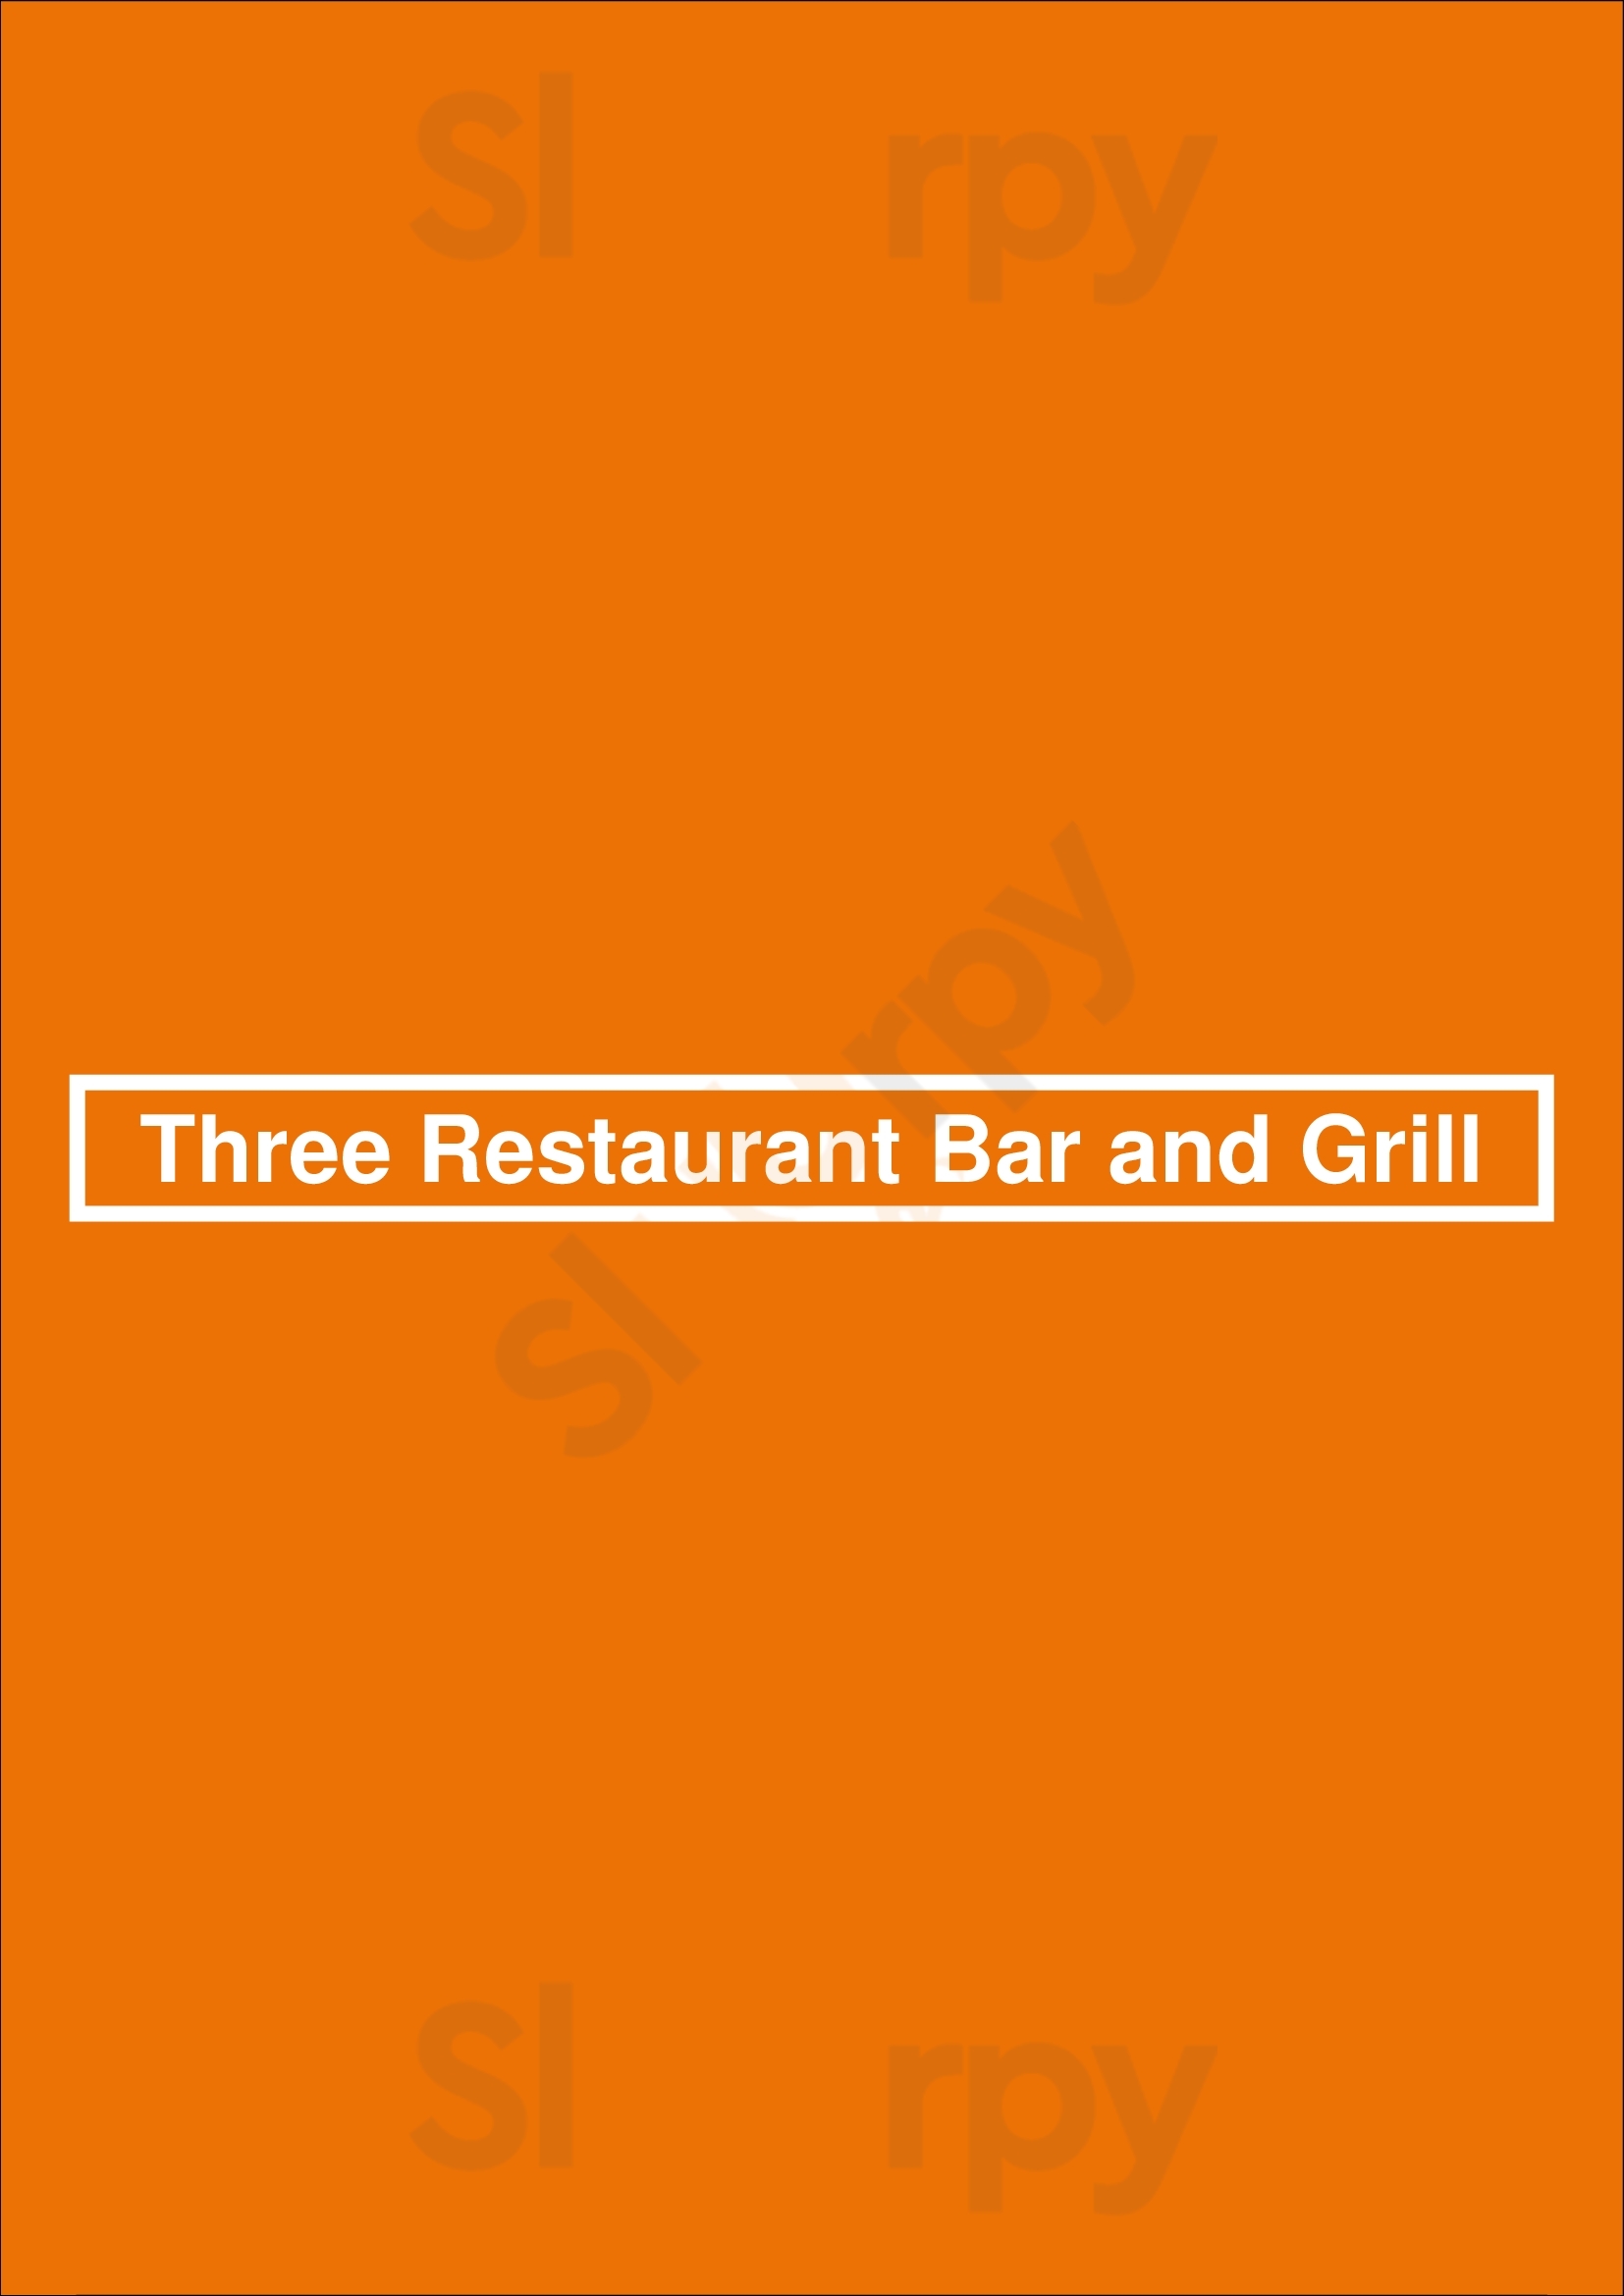 Three Restaurant Bar And Grill Caloundra Menu - 1